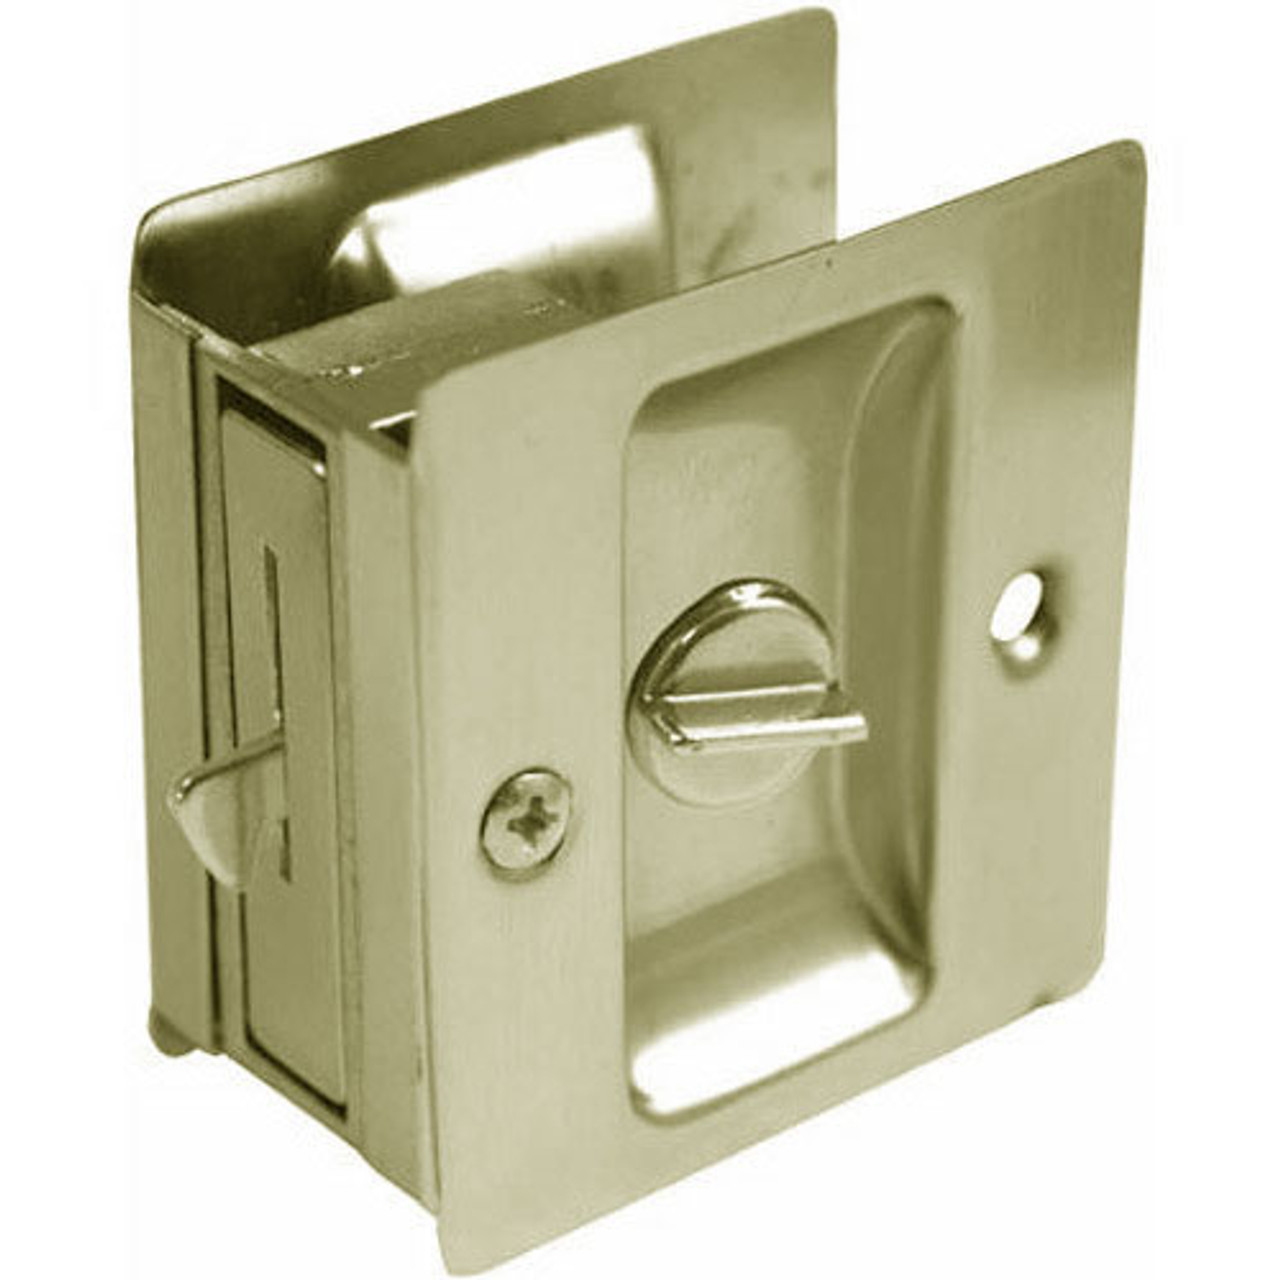 PDL-101-609 Don Jo Pocket Door Lock in Satin Brass Finish